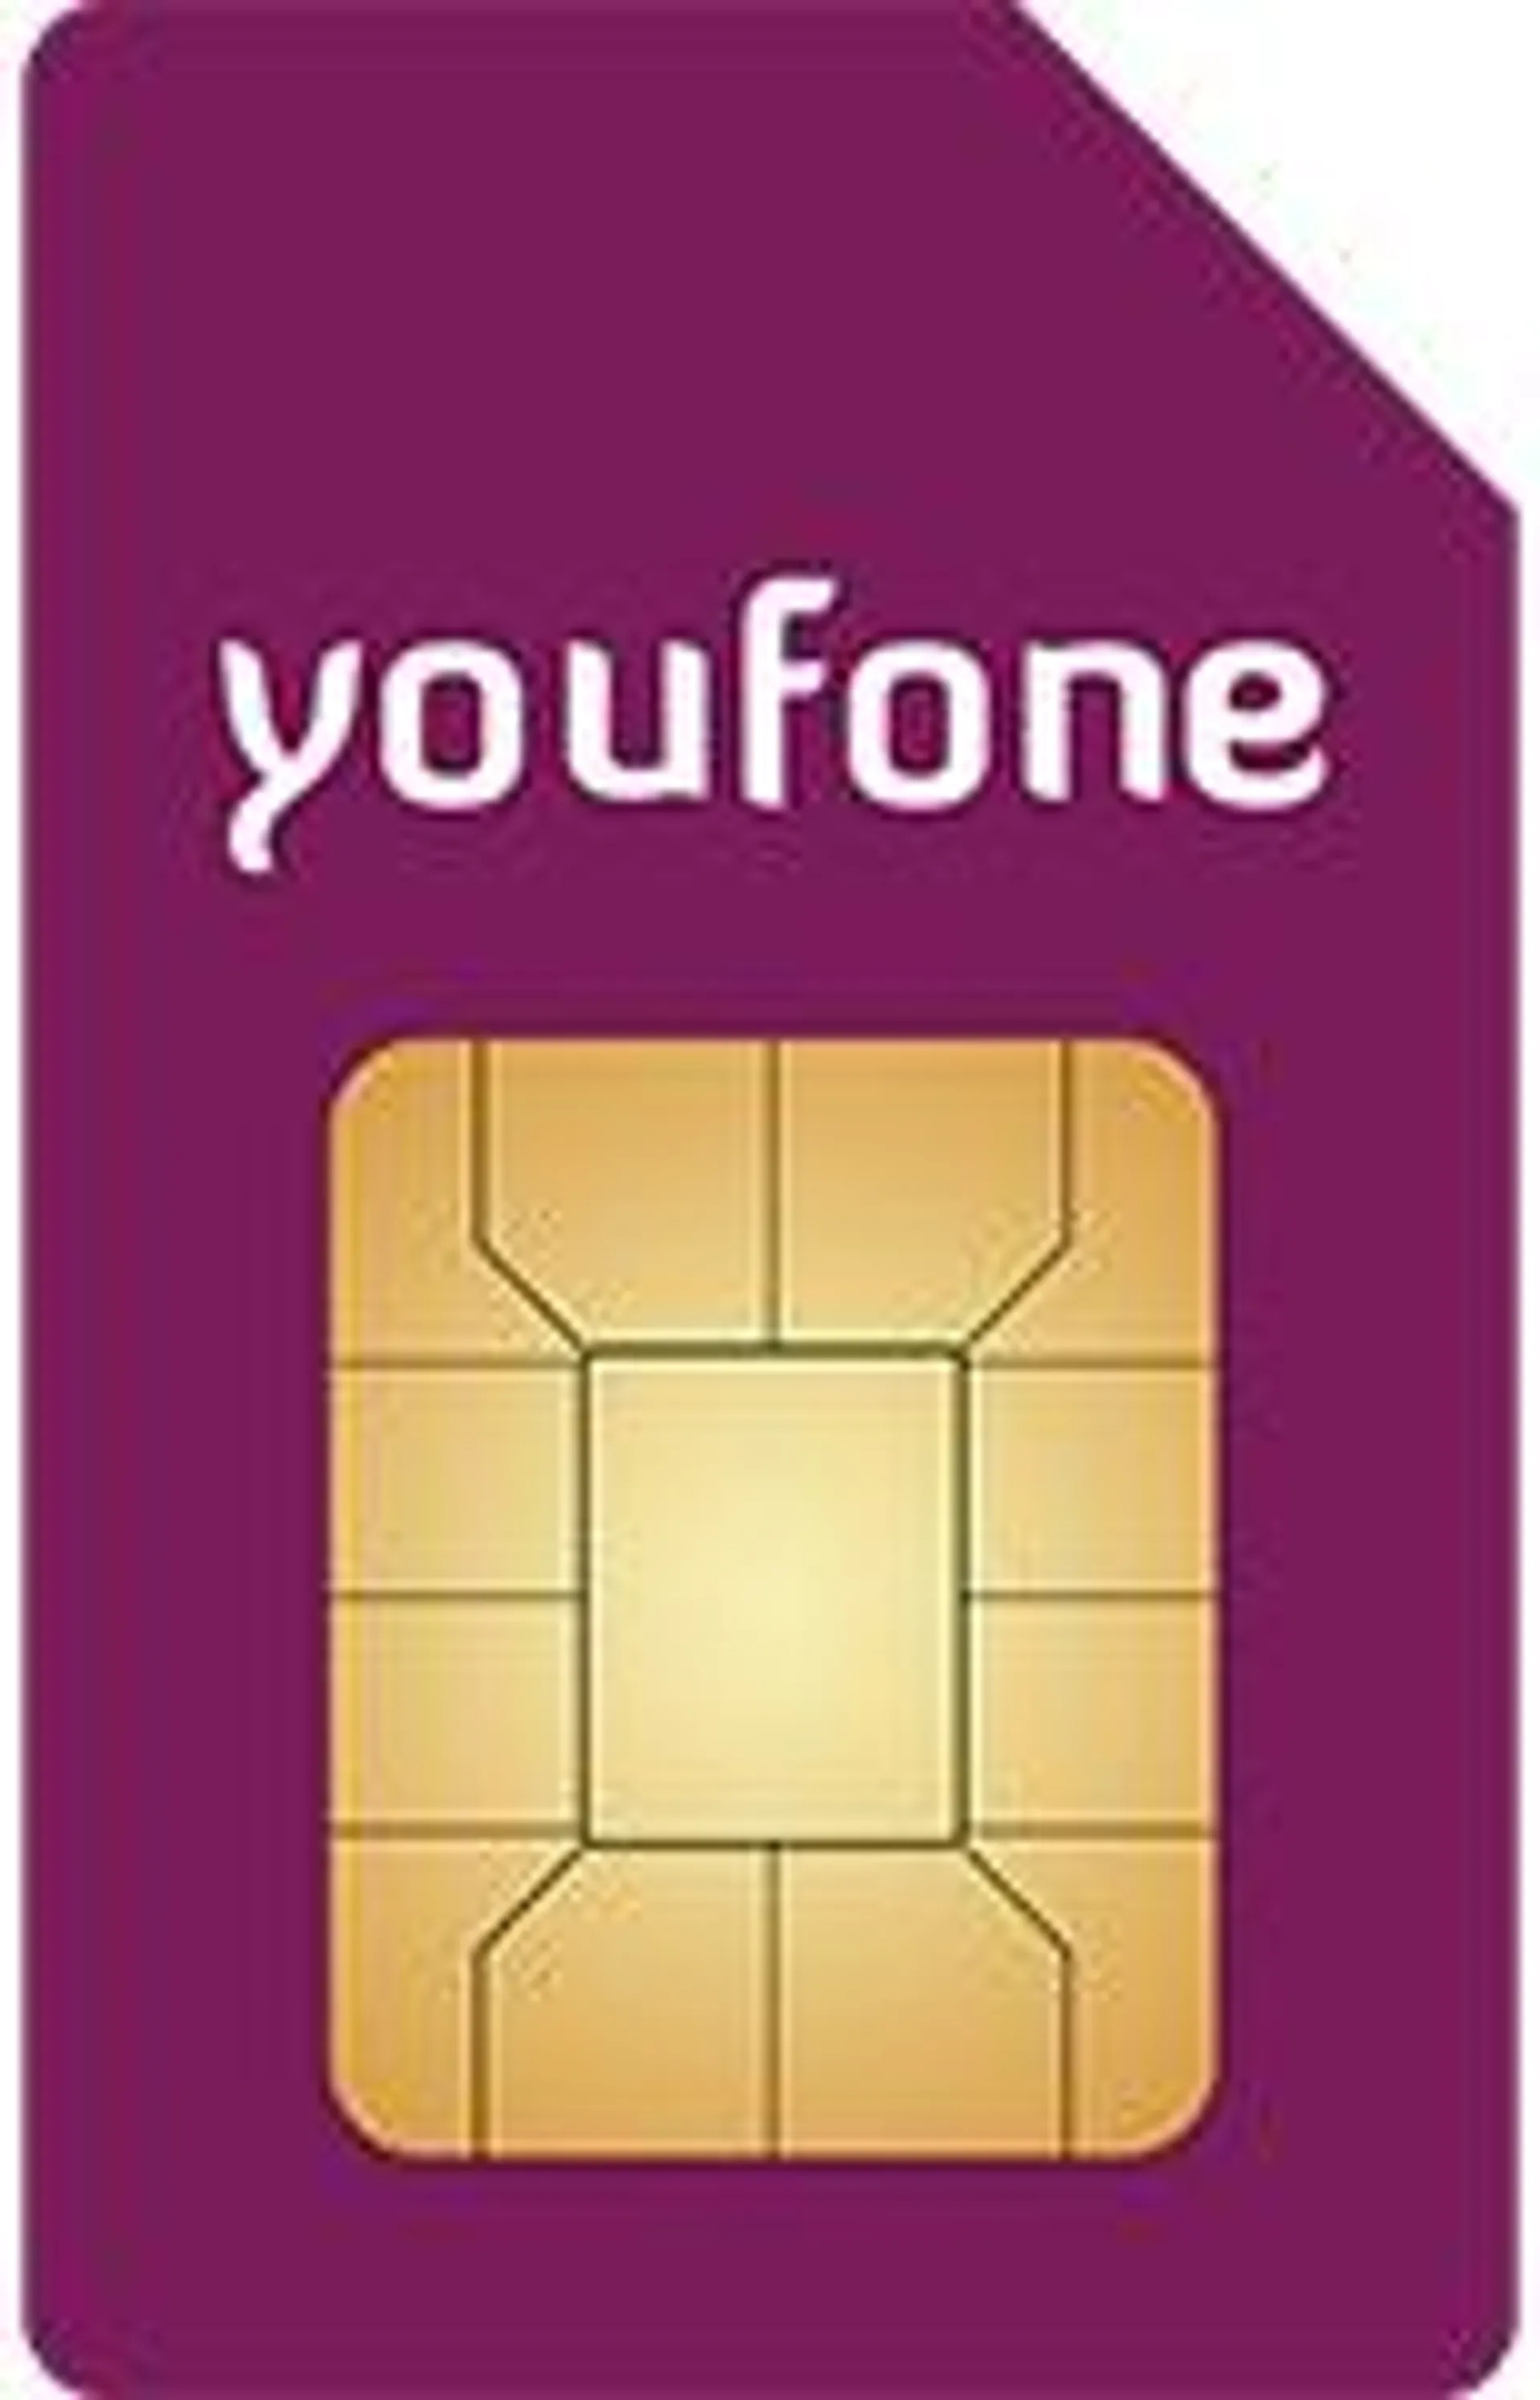 Youfone 200 min/sms + 3GB 5G - 2 jaar - Sim Only